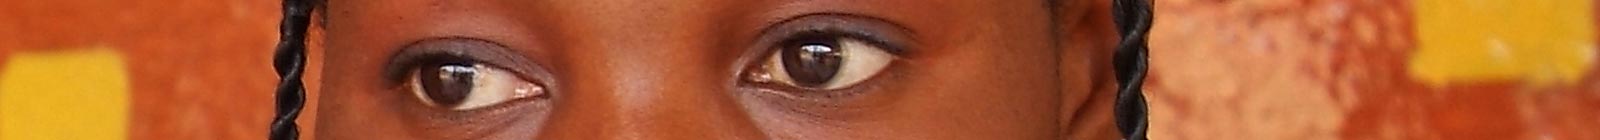 Eyes of Ilira, Conakry, Guinea.